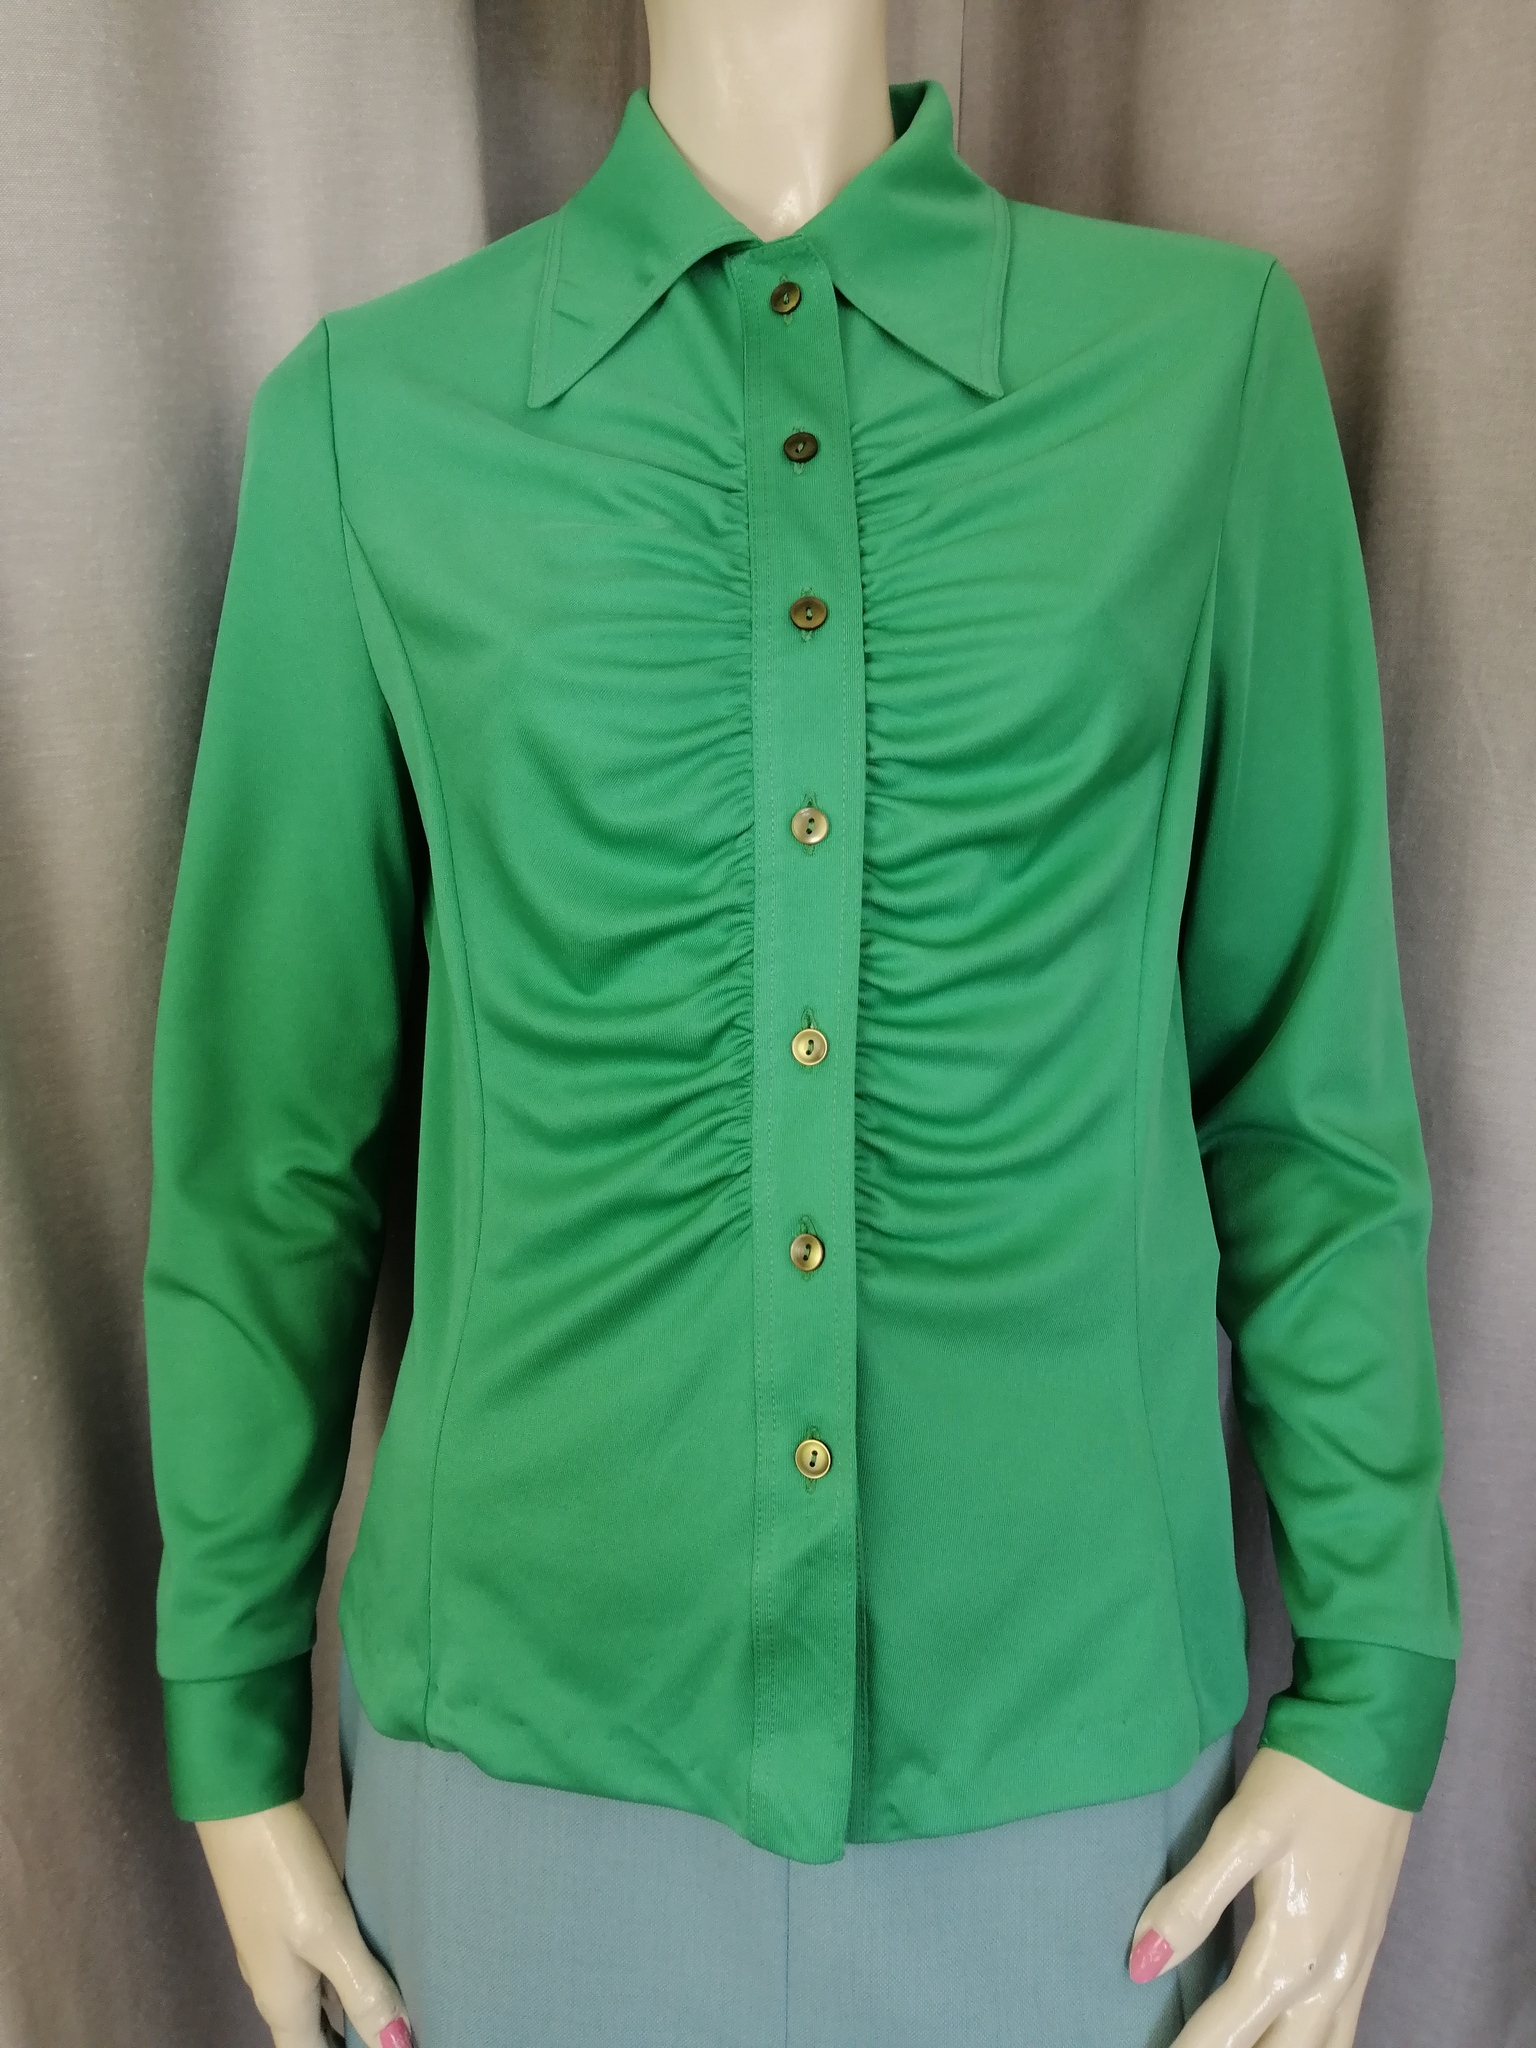 Vintage Lapidus grön blus draperad fram lång ärm 70-tal polyester